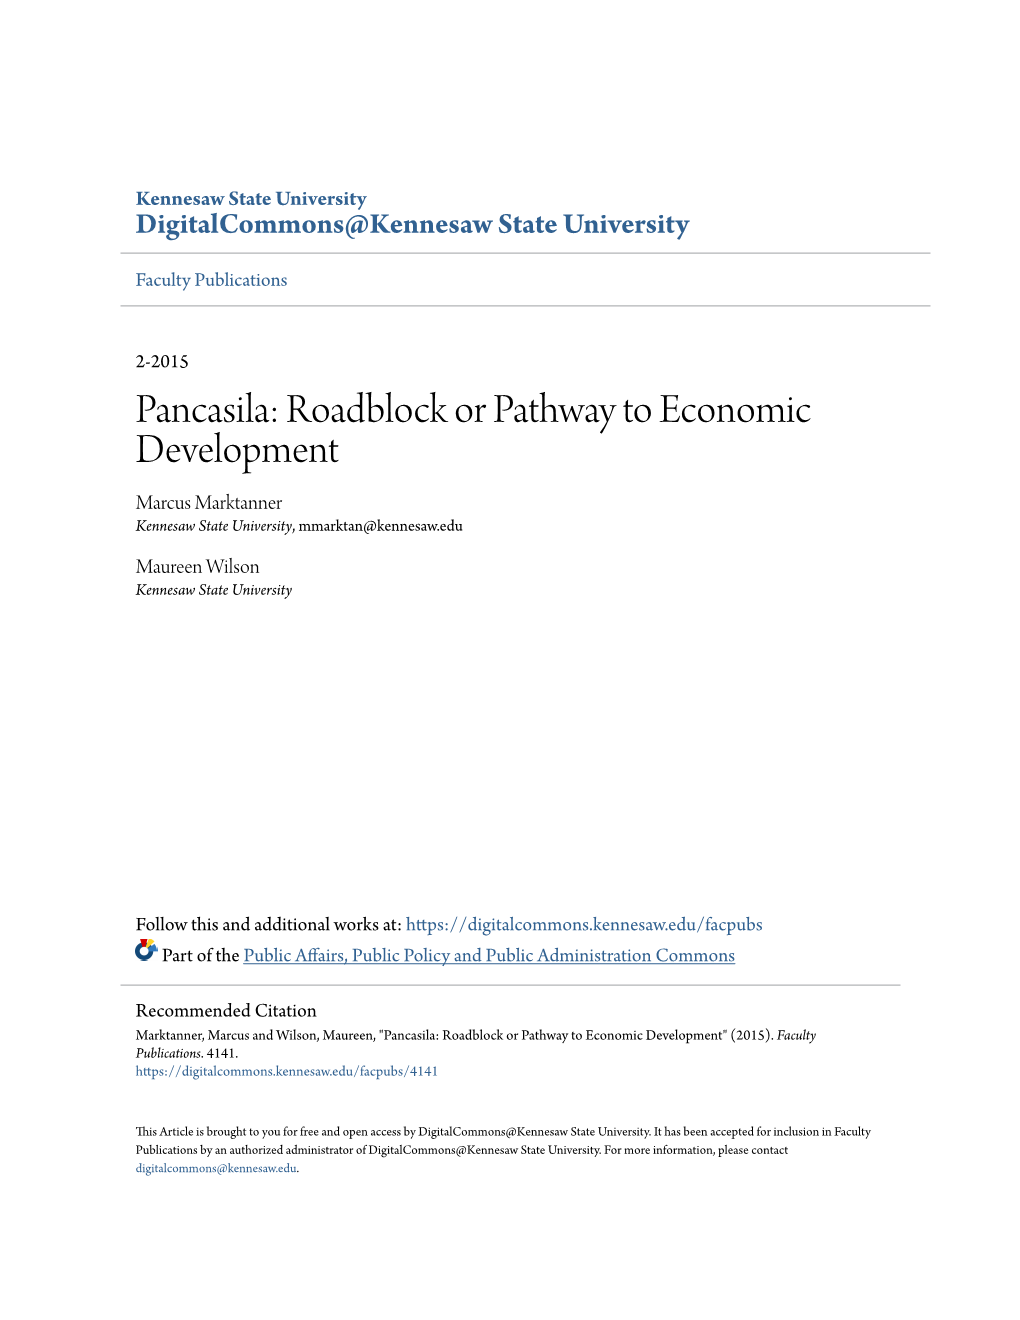 Pancasila: Roadblock Or Pathway to Economic Development Marcus Marktanner Kennesaw State University, Mmarktan@Kennesaw.Edu